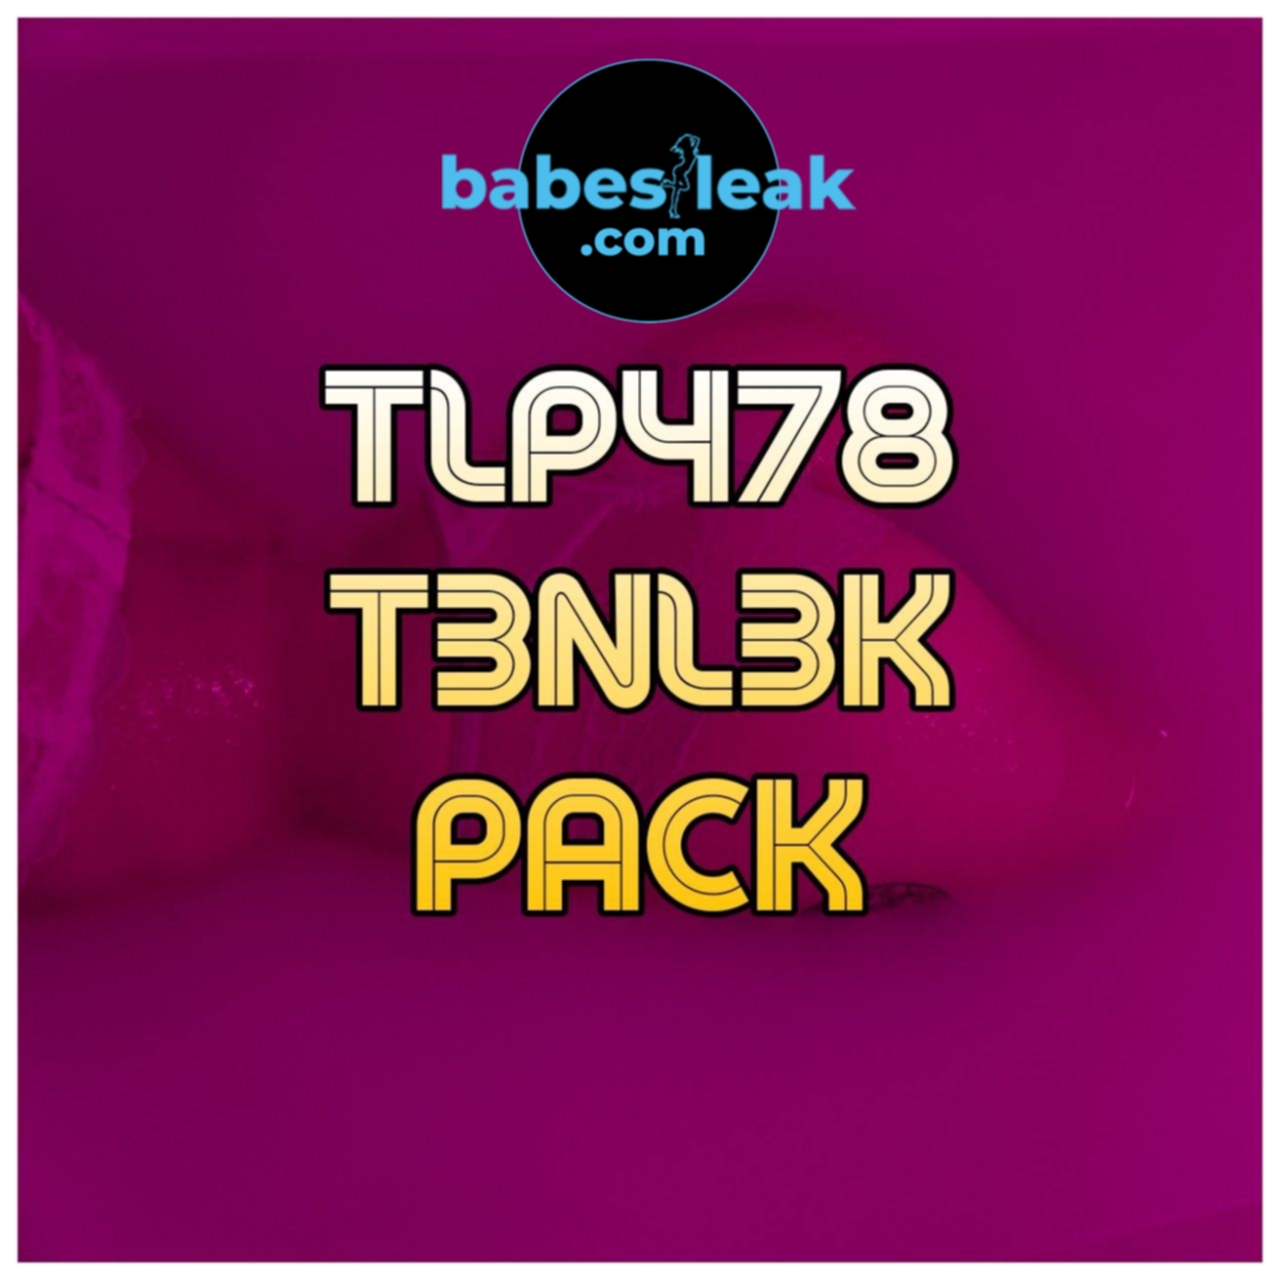 Teen Leak Pack – TLP478 - statewins hlb leak